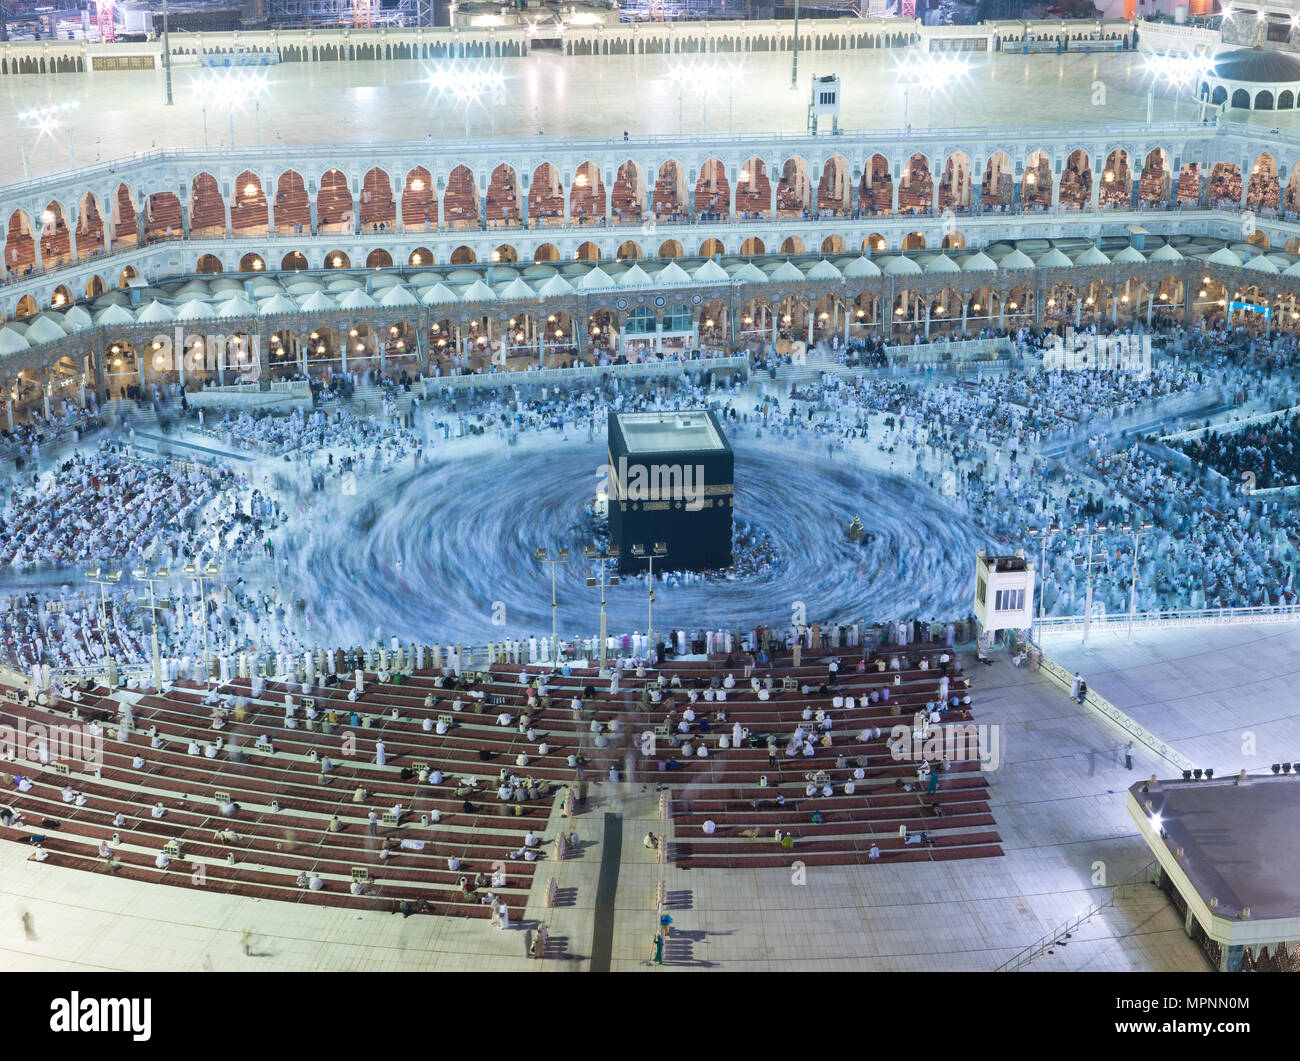 Prayer and Tawaf - circumambulation - of Muslims Around AlKaaba in Mecca, Saudi Arabia, Aerial Top View Stock Photo